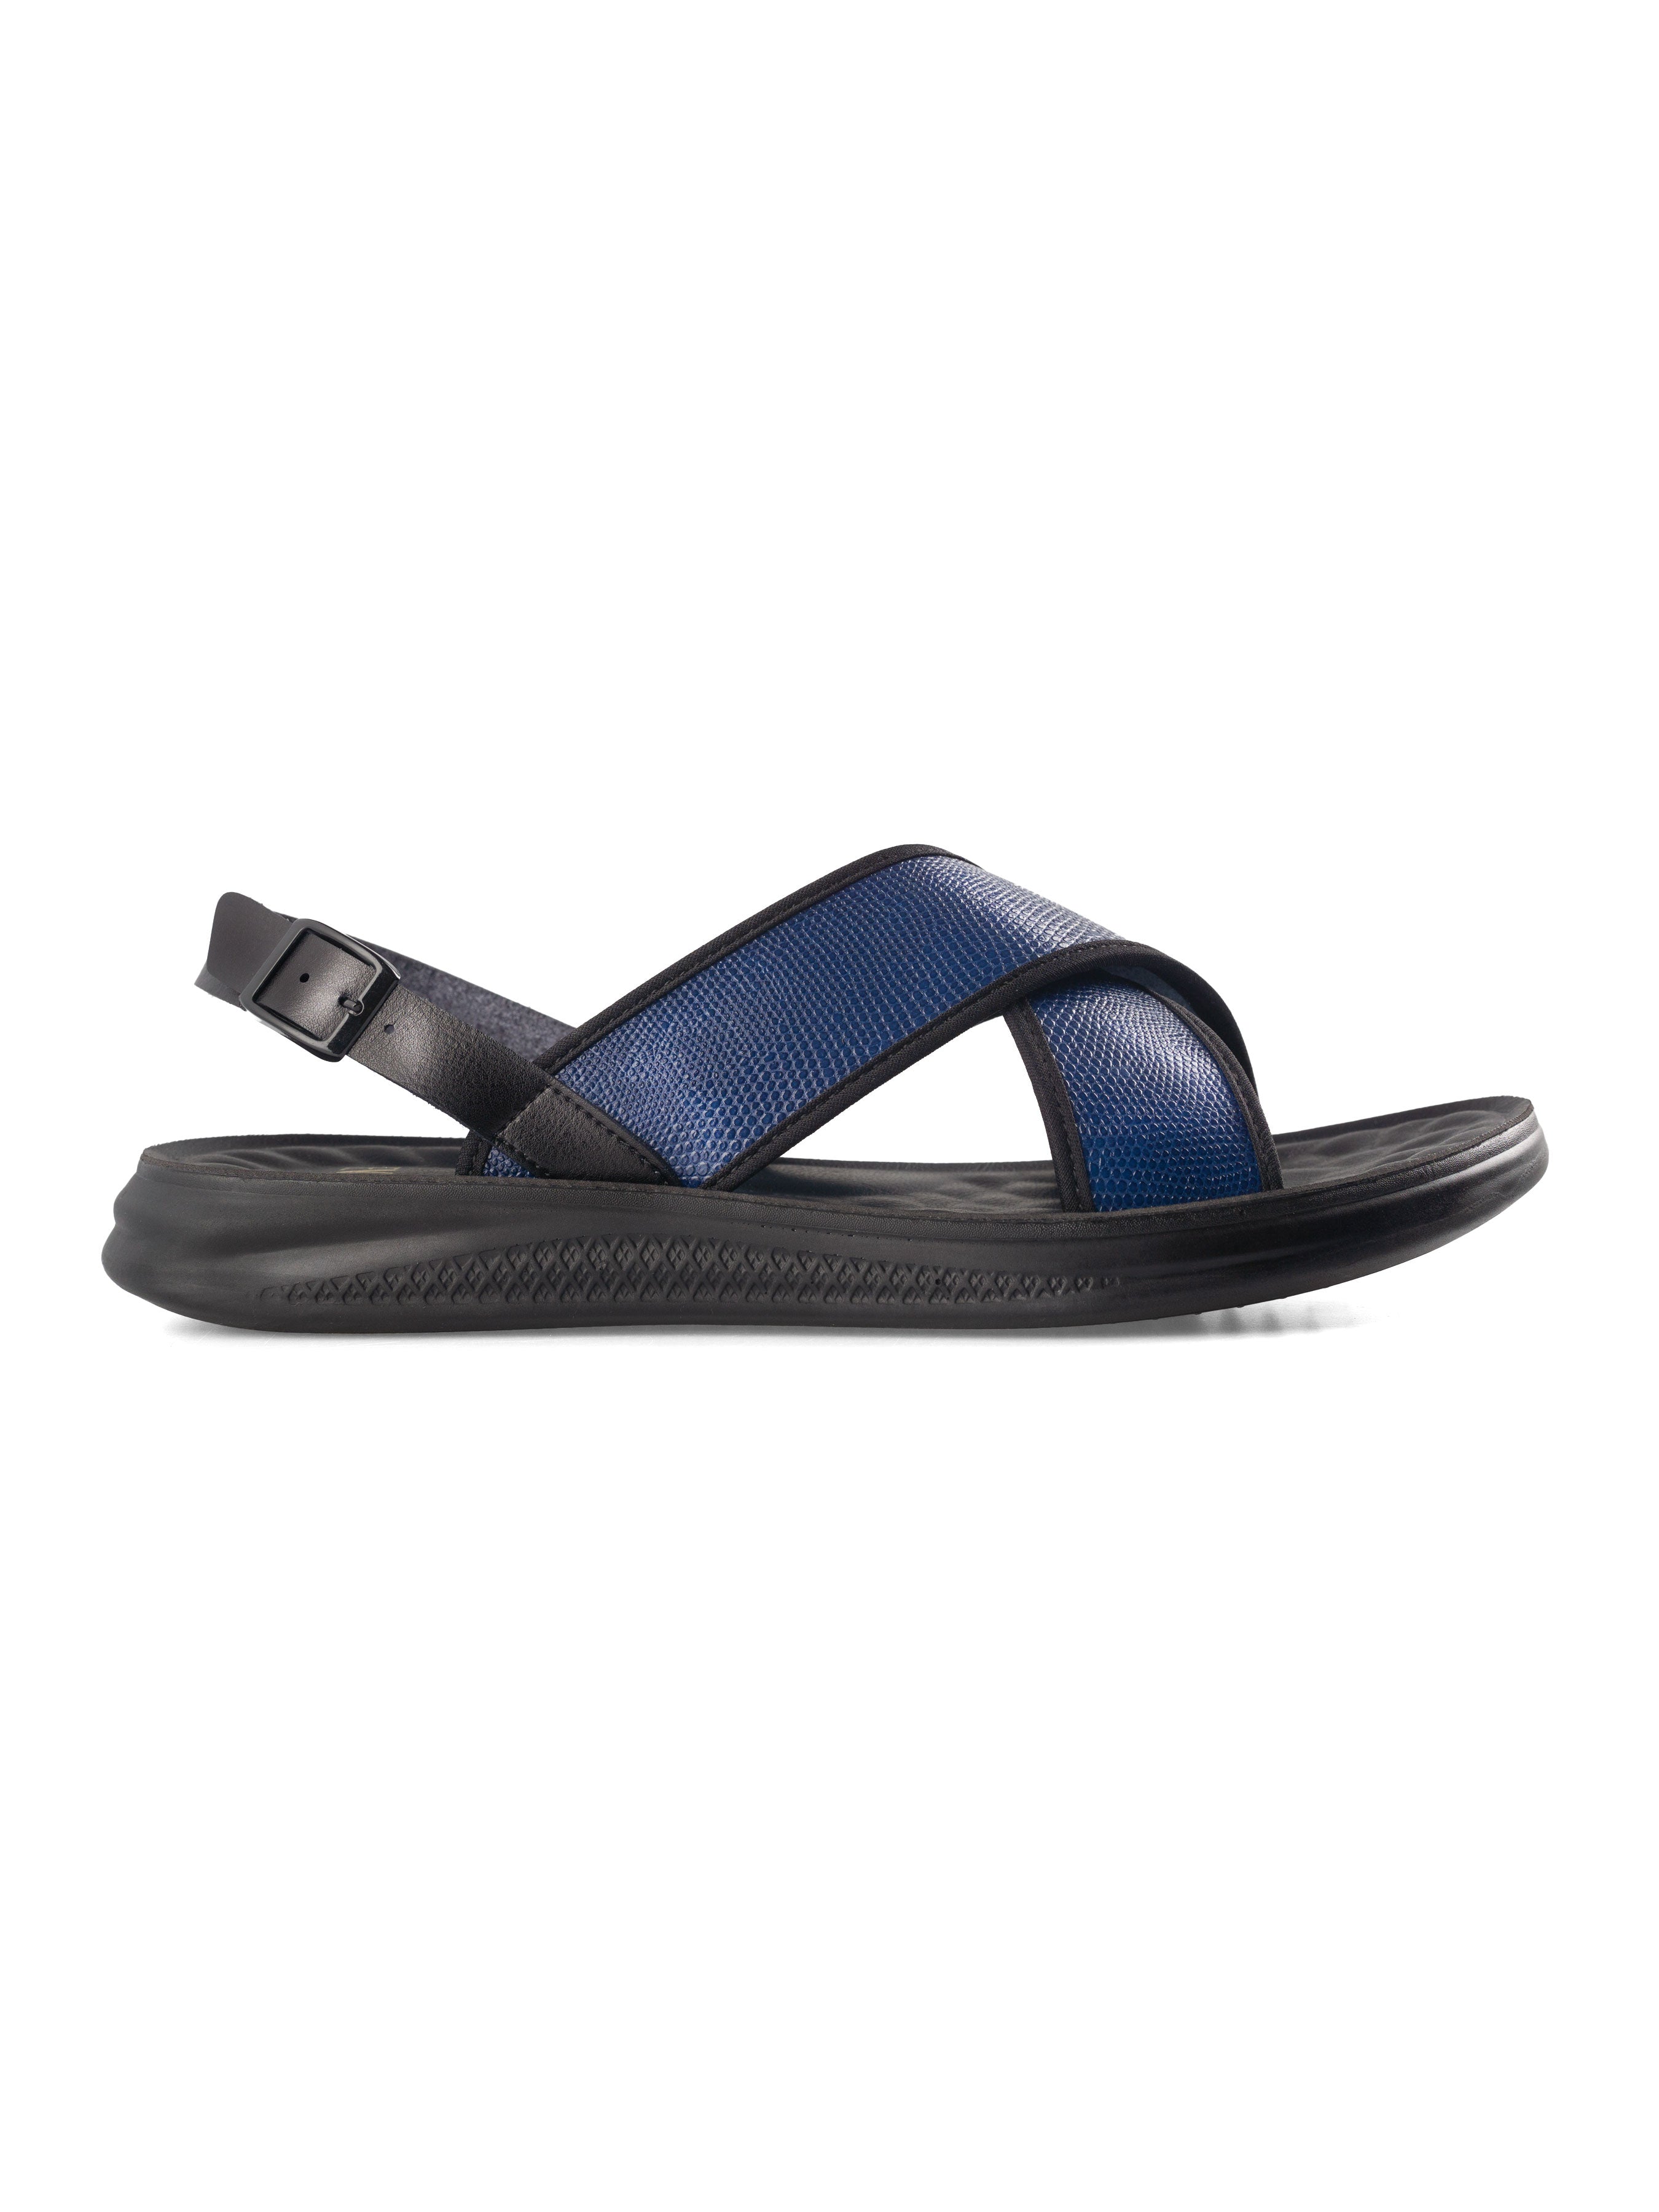 Slingback Cross Strap Sandal - Electric Blue Phyton Leather - Zeve Shoes